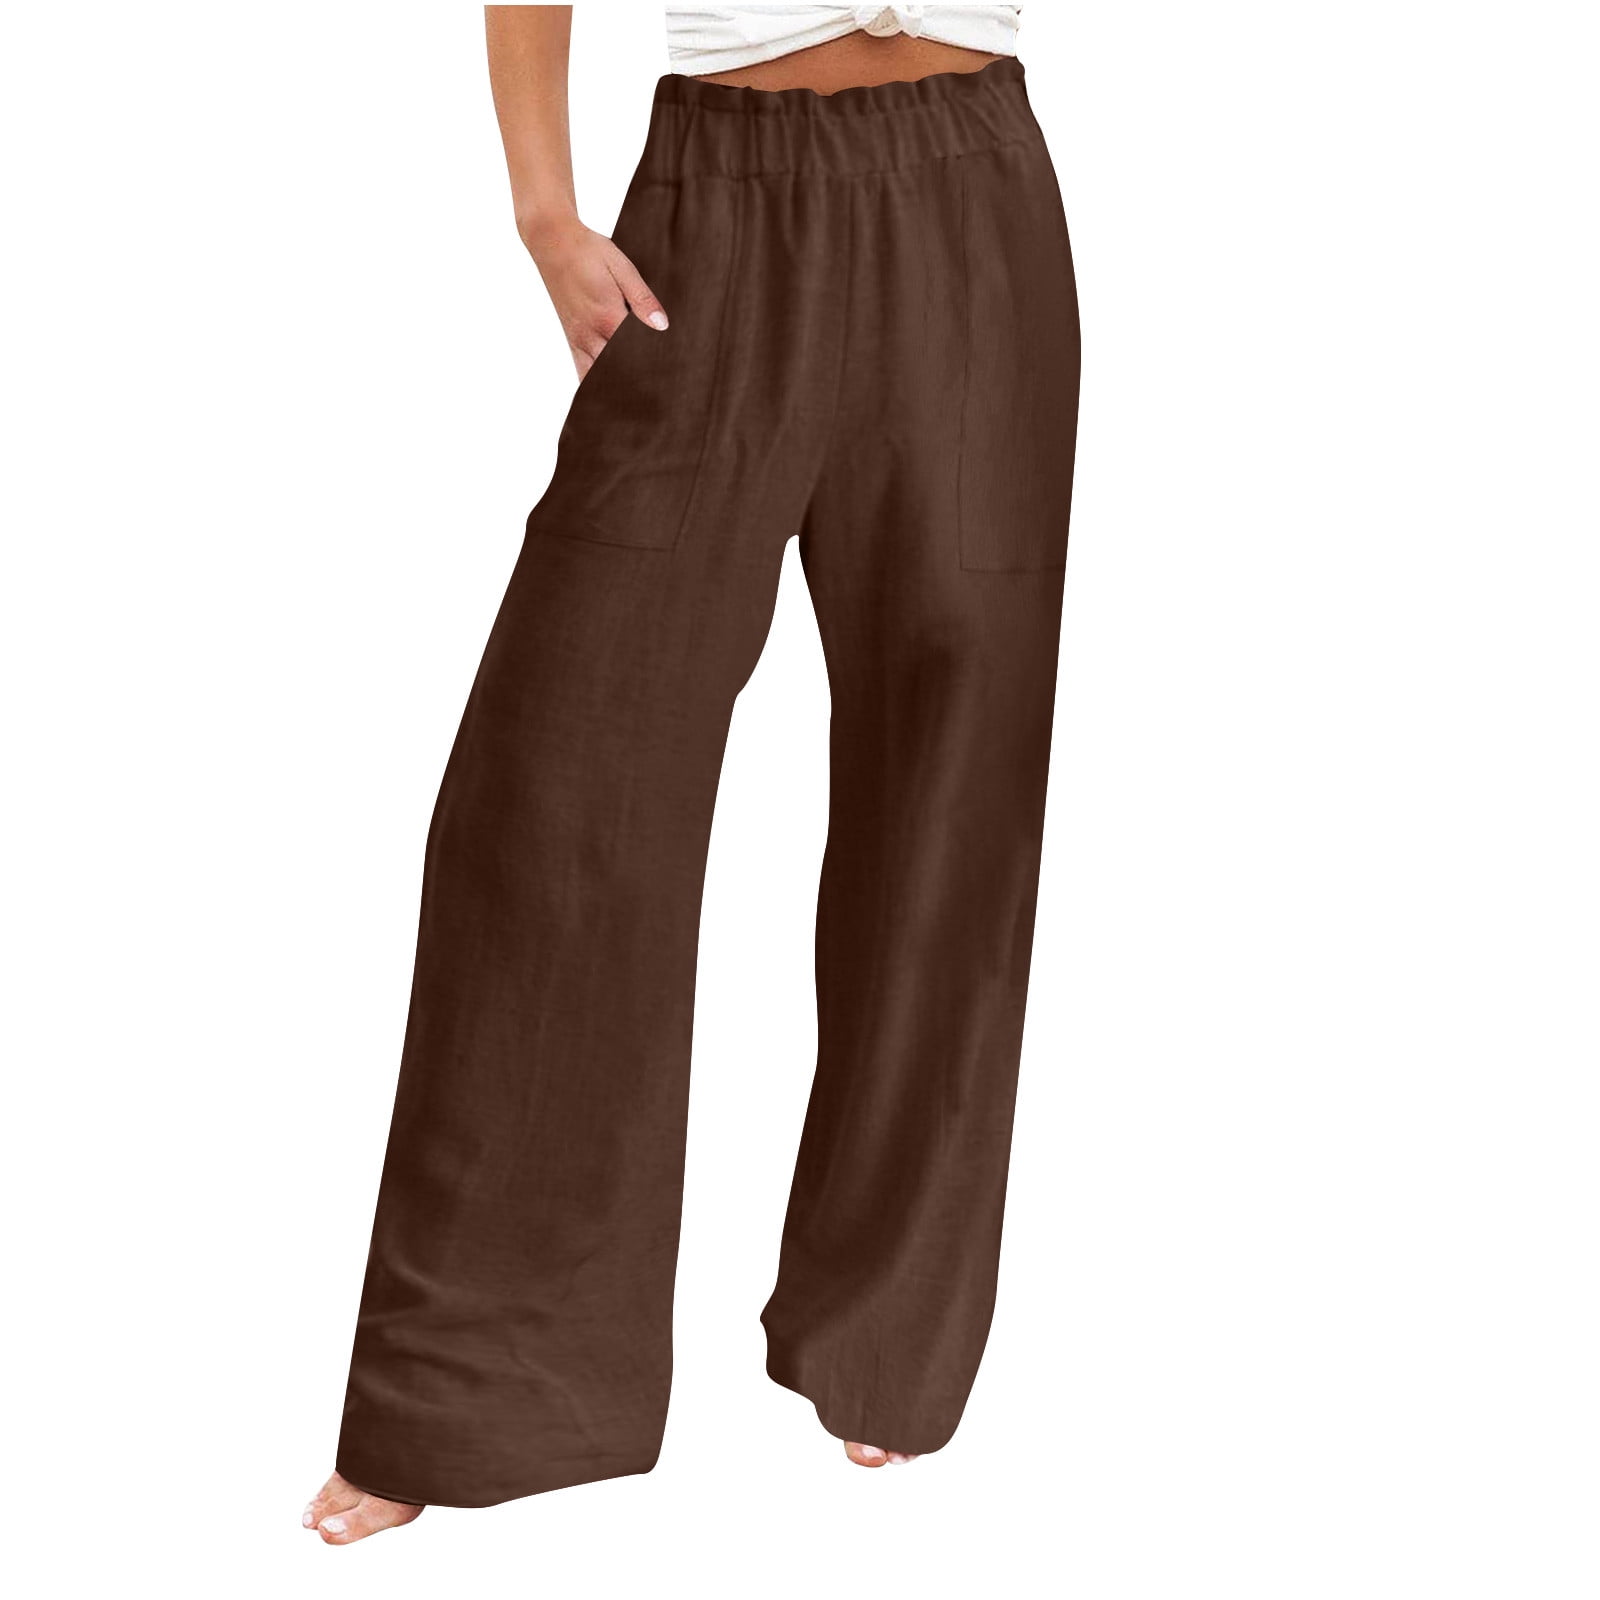 QUYUON Pants for Women Sale Casual Color Fashionable Pocket Elastic Waist  Straight Pants Fishing Pants Long Pant Leg Length Loungewear Style P5140  Black L 